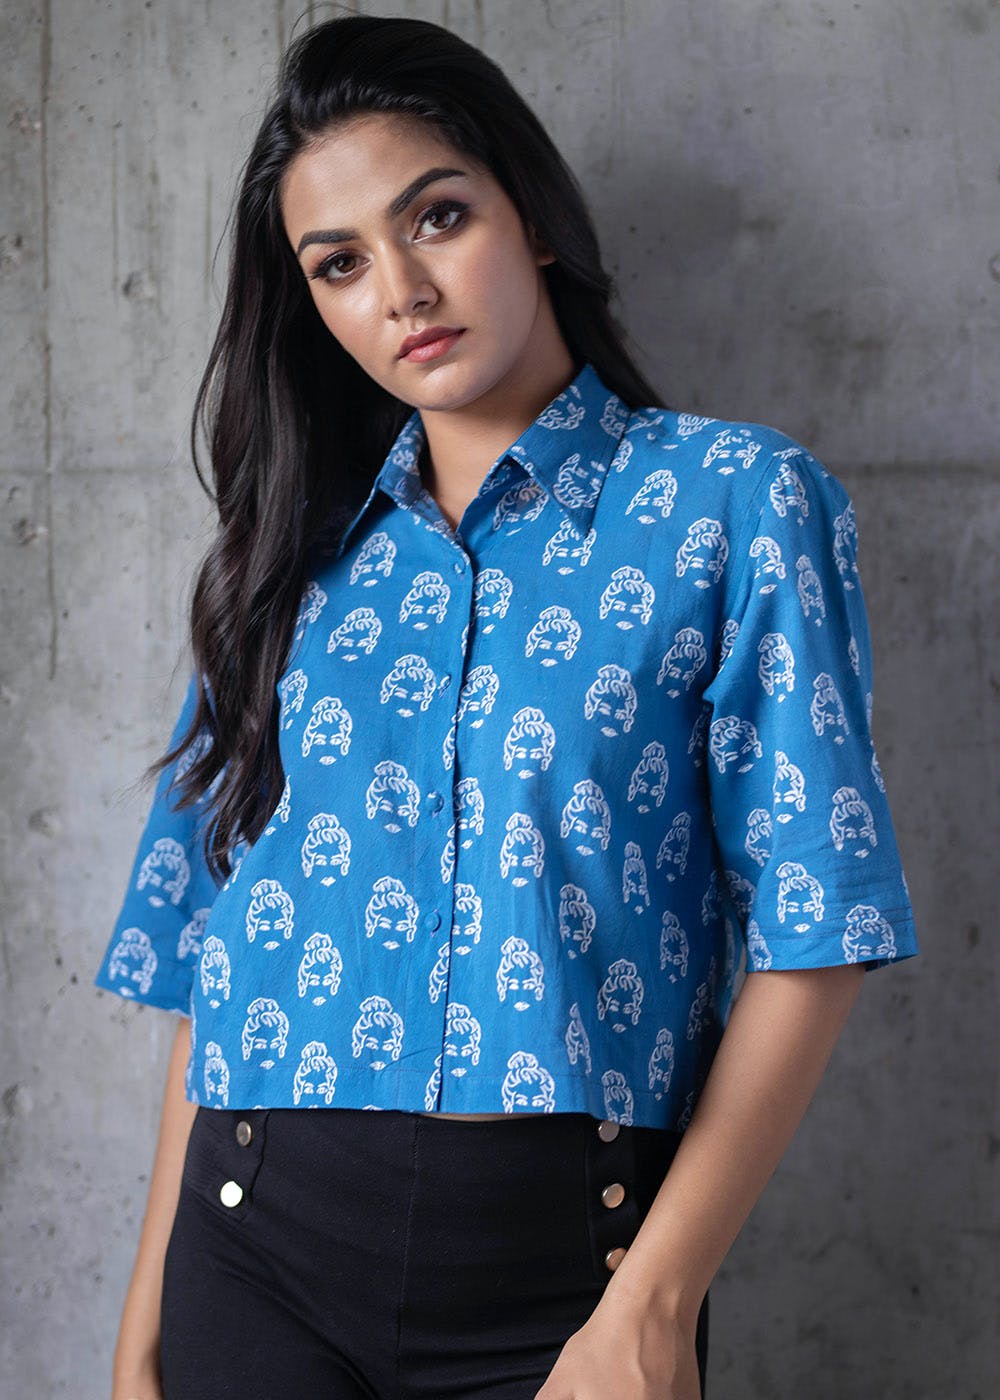 Get Contrast Girl Face Printed Blue Crop Shirt at ₹ 2650 | LBB Shop